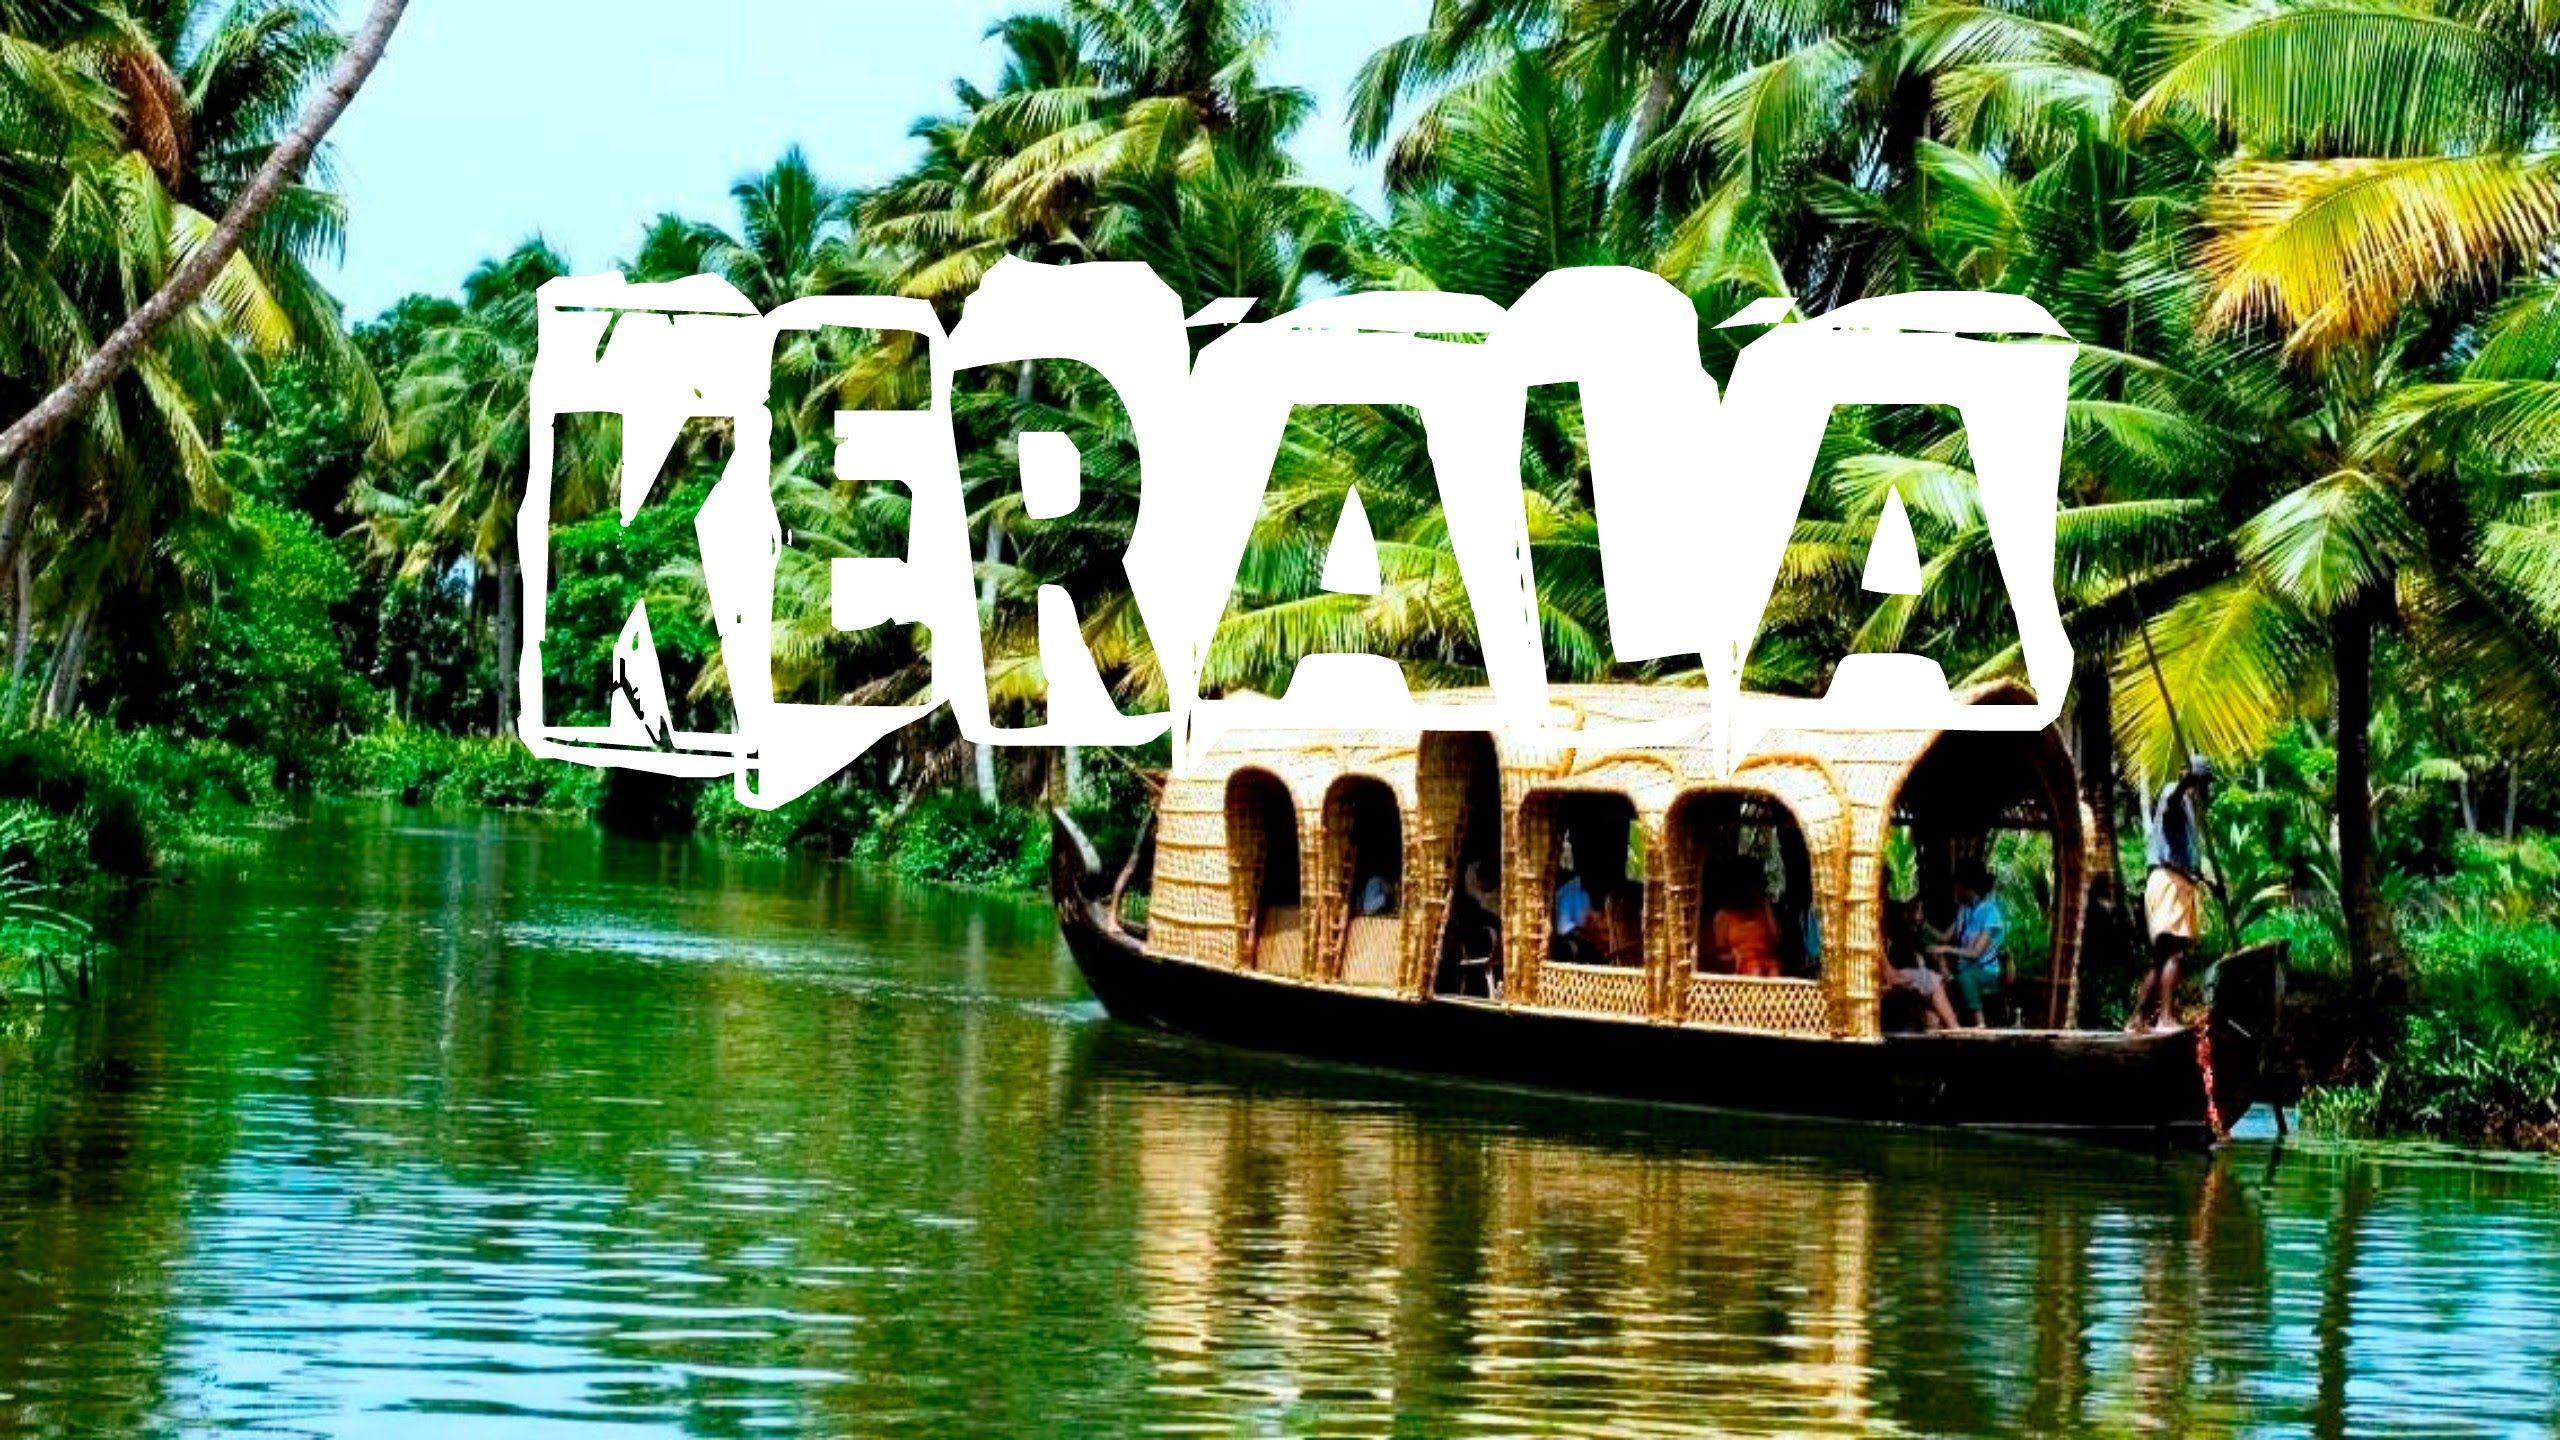 kerala tourism hd images